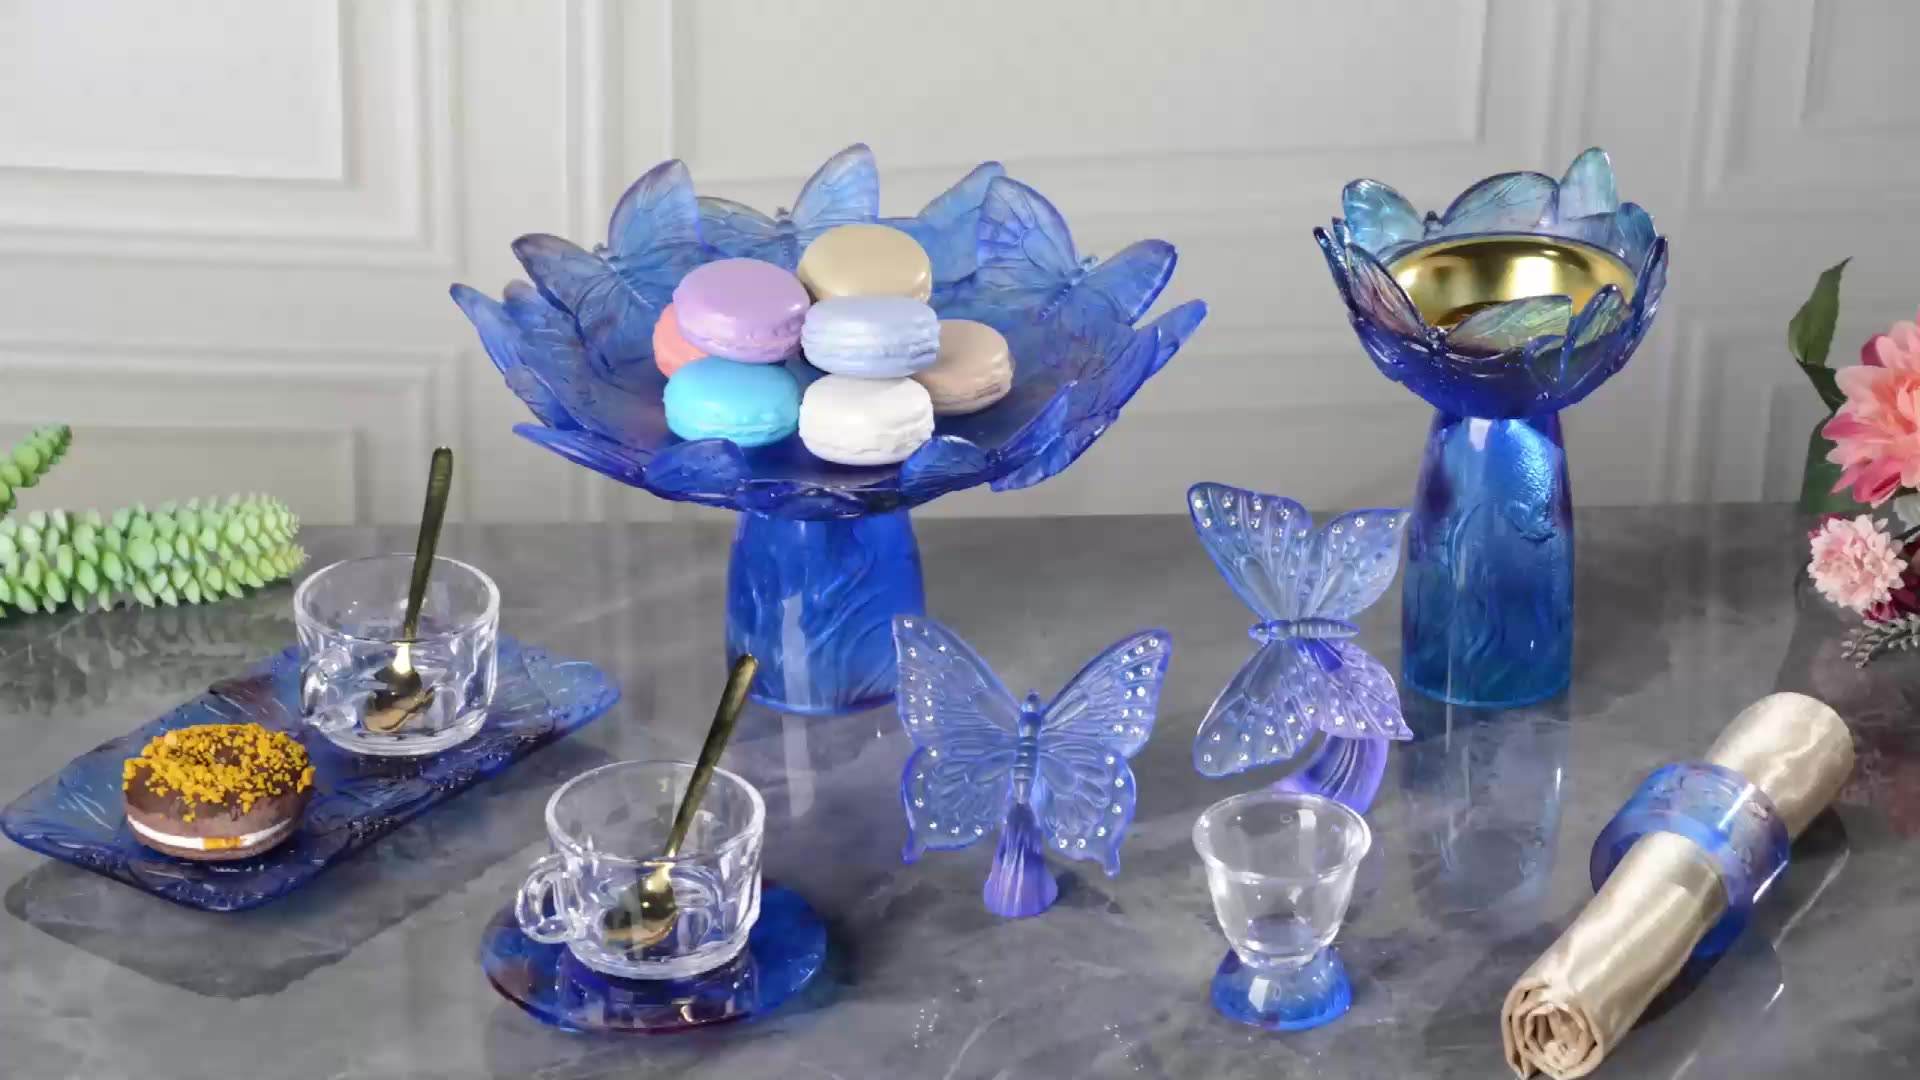 Crystal Handmade Inside Carving Dessert Cake Plate Decorative Bowl Centerpiece Gift Set